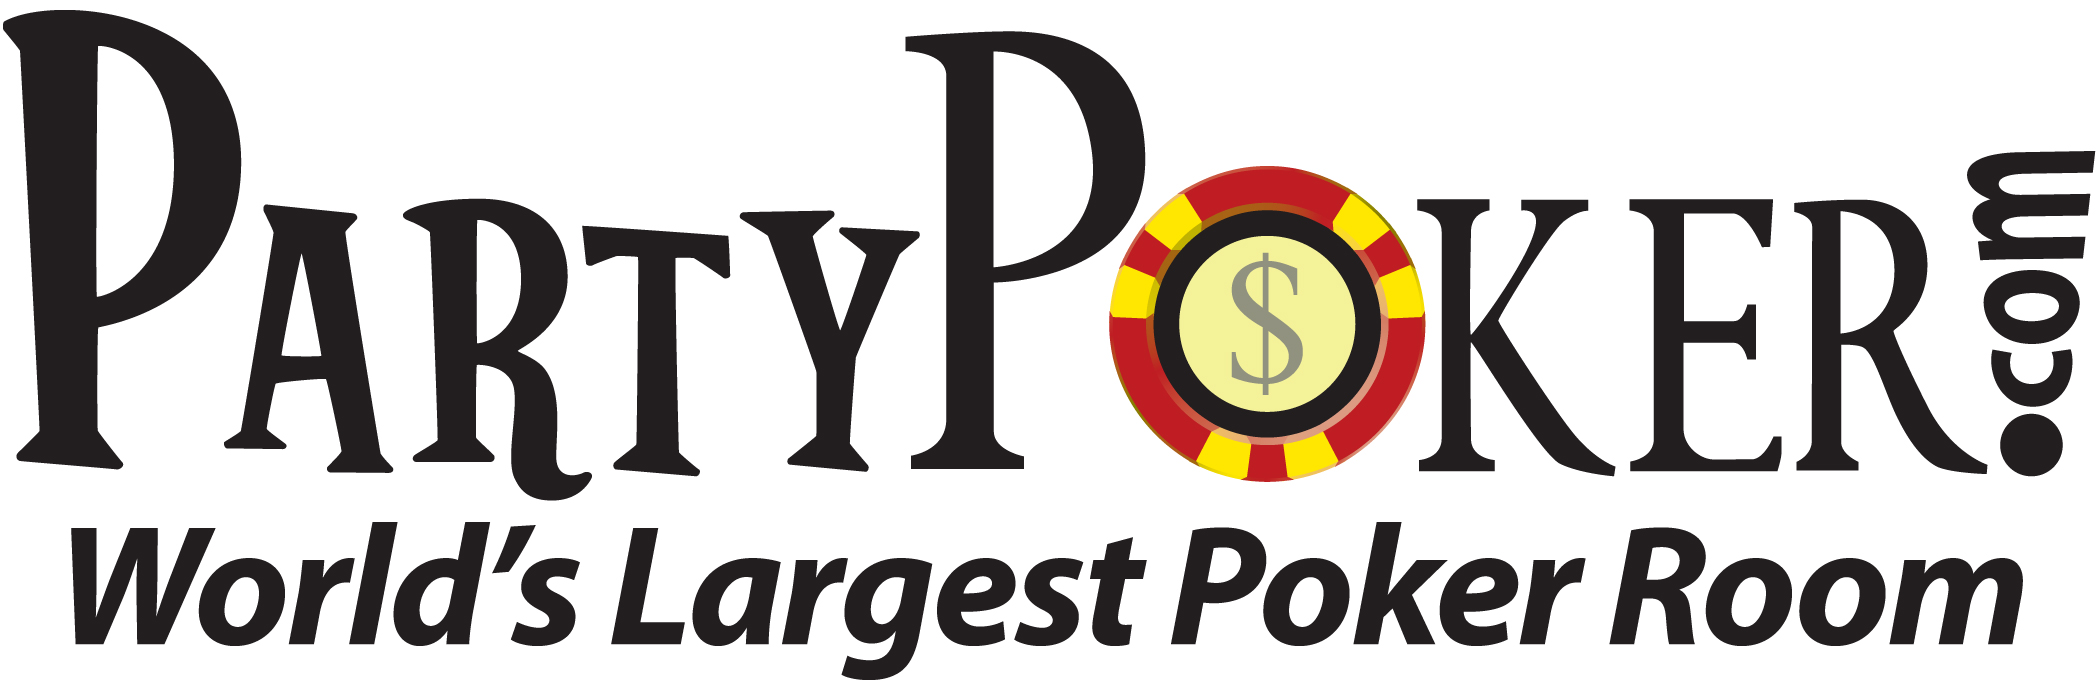 partypoker_logo